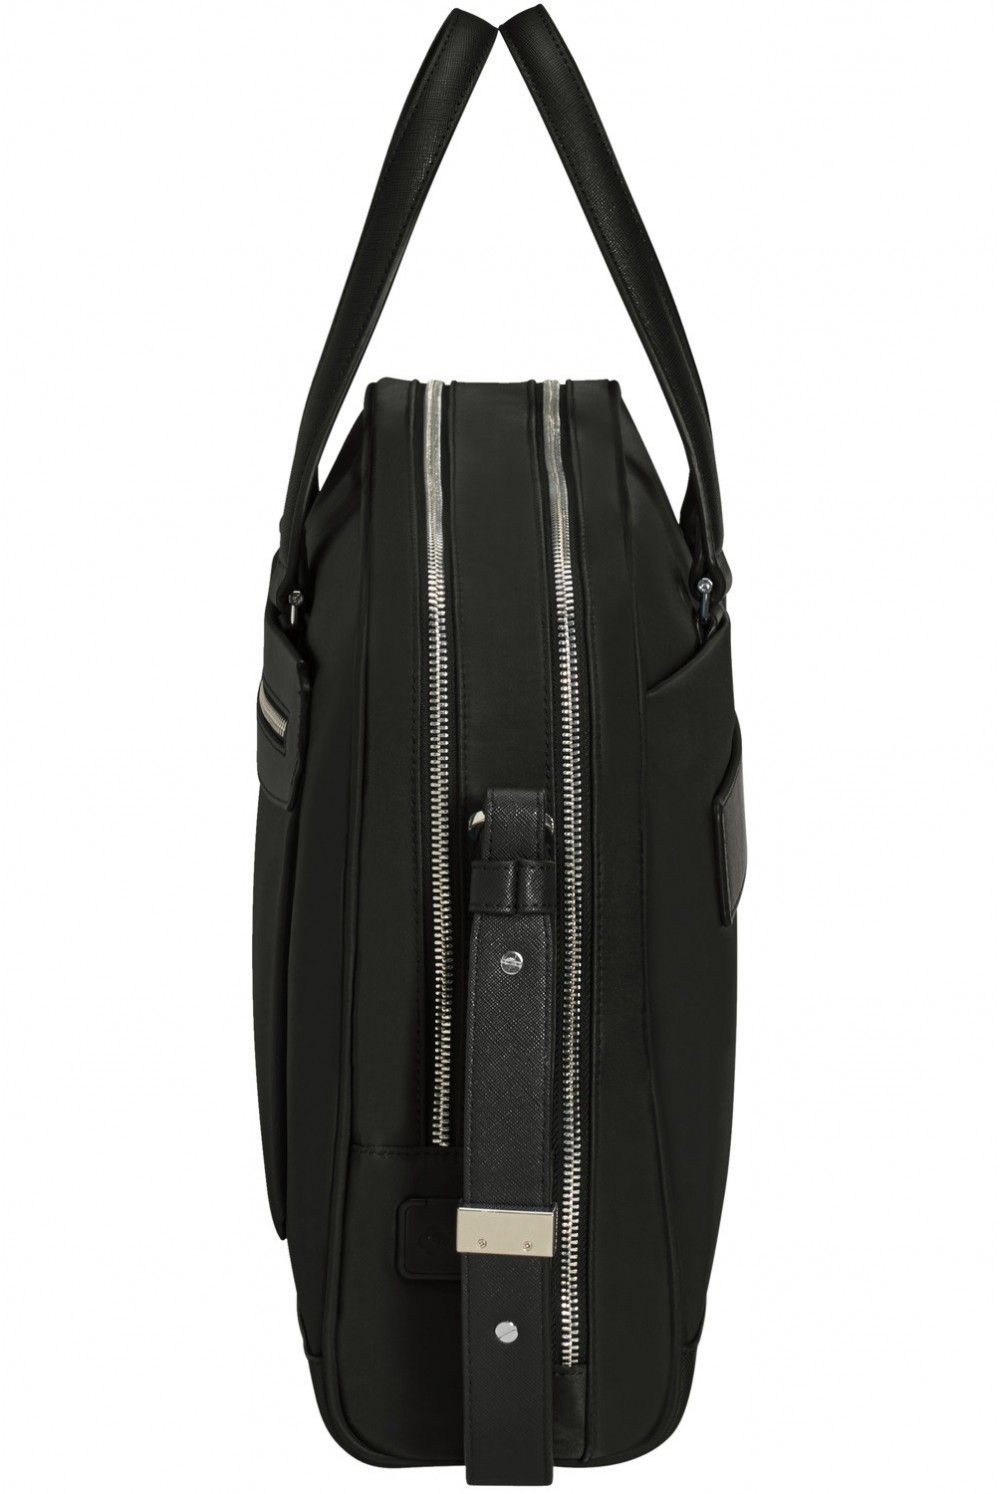 Samsonite Zalia 2 15.6 inch laptop handbag